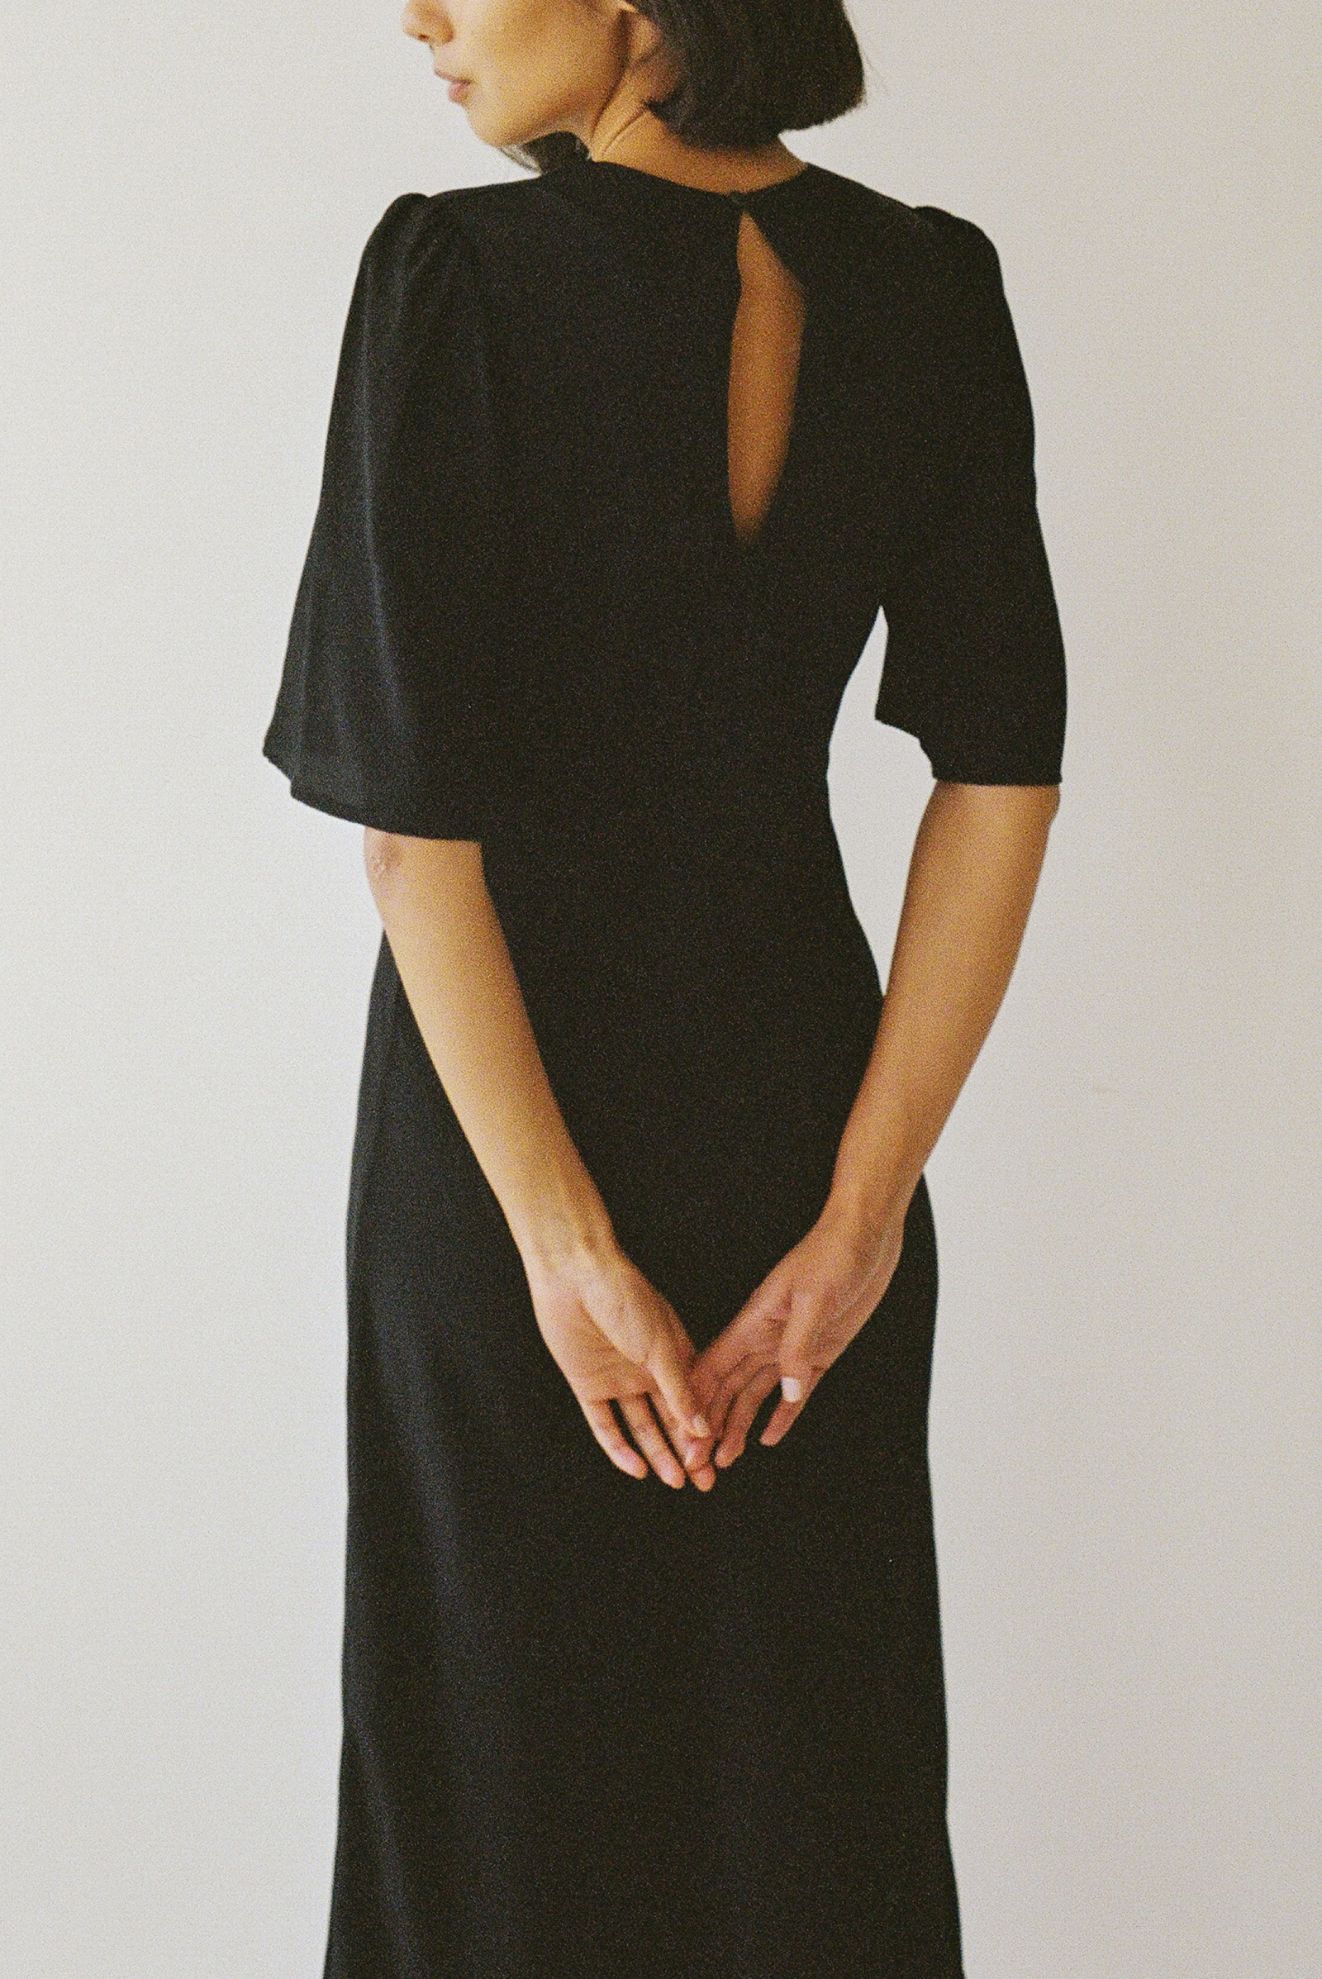 Paloma deux dress - Black silk - Ellis Label - Womens designer clothing_0052_82980030